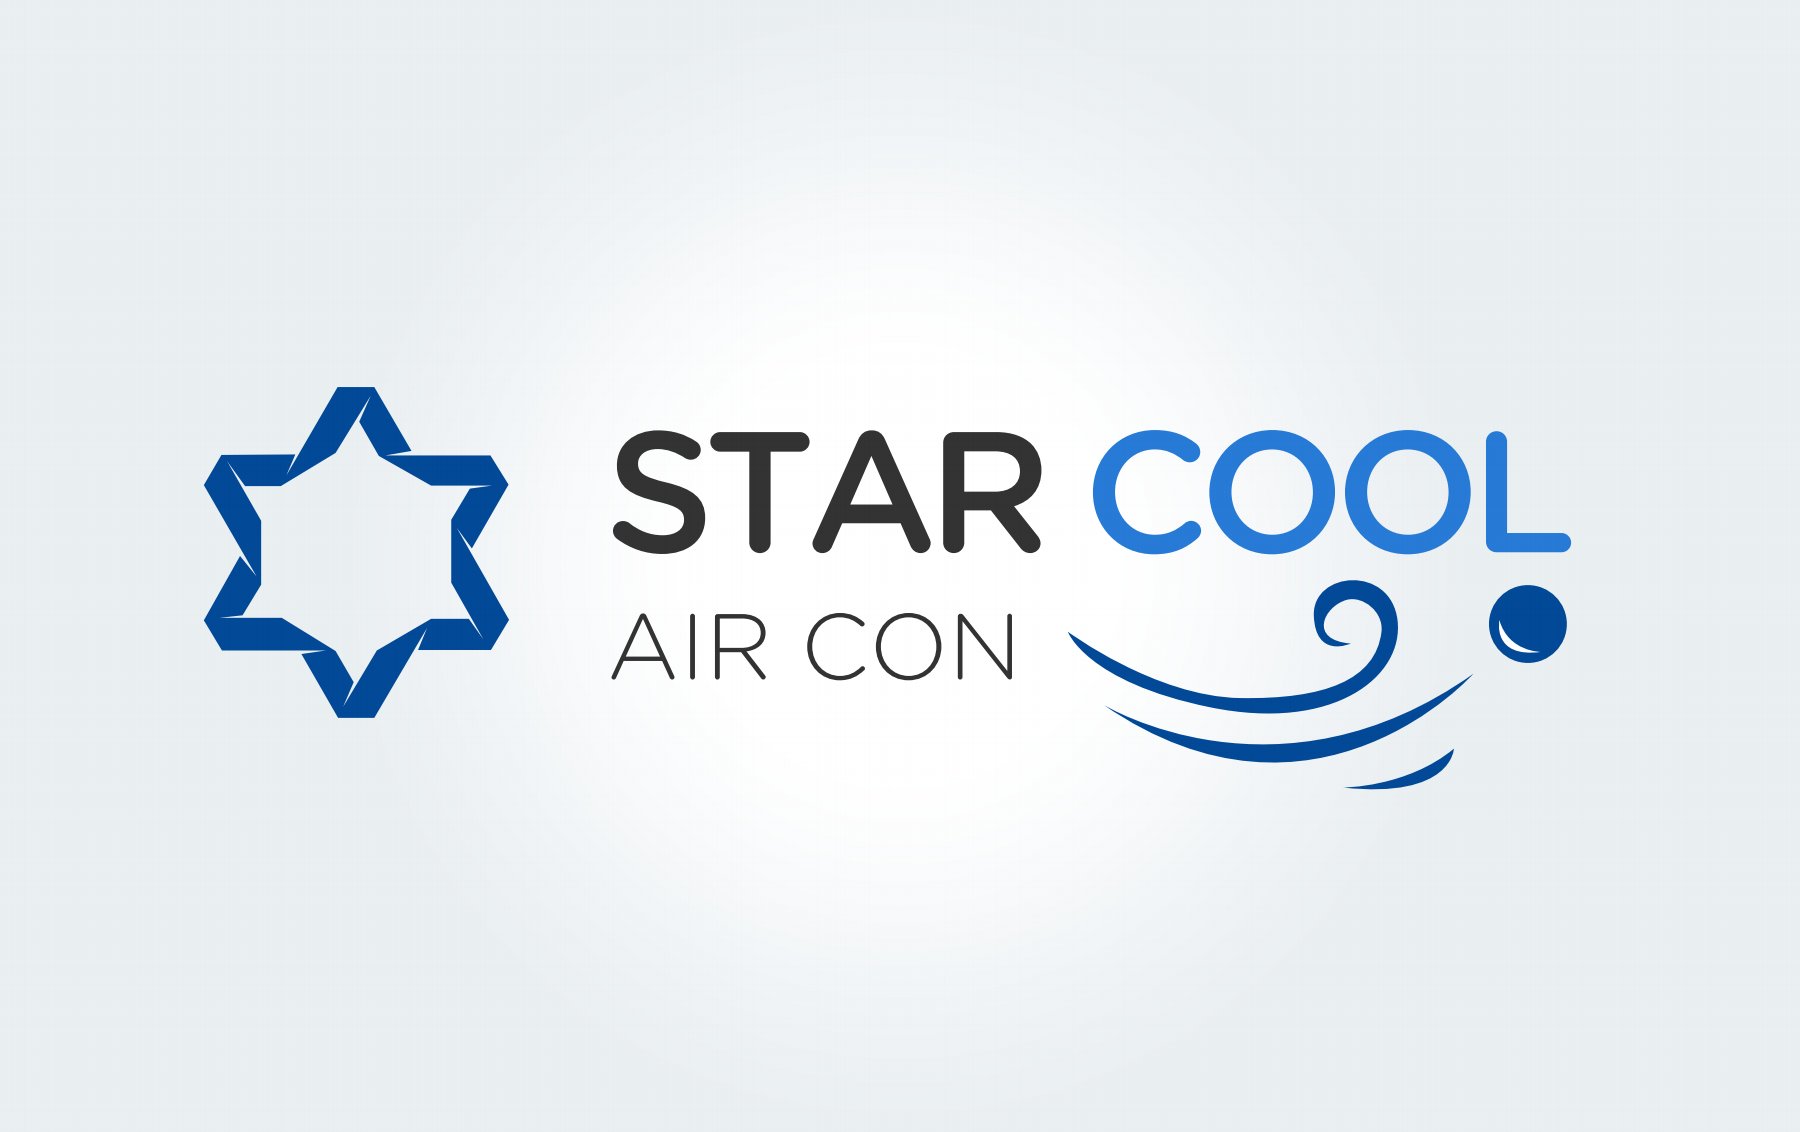 Starcool Aircon (S) Pte Ltd